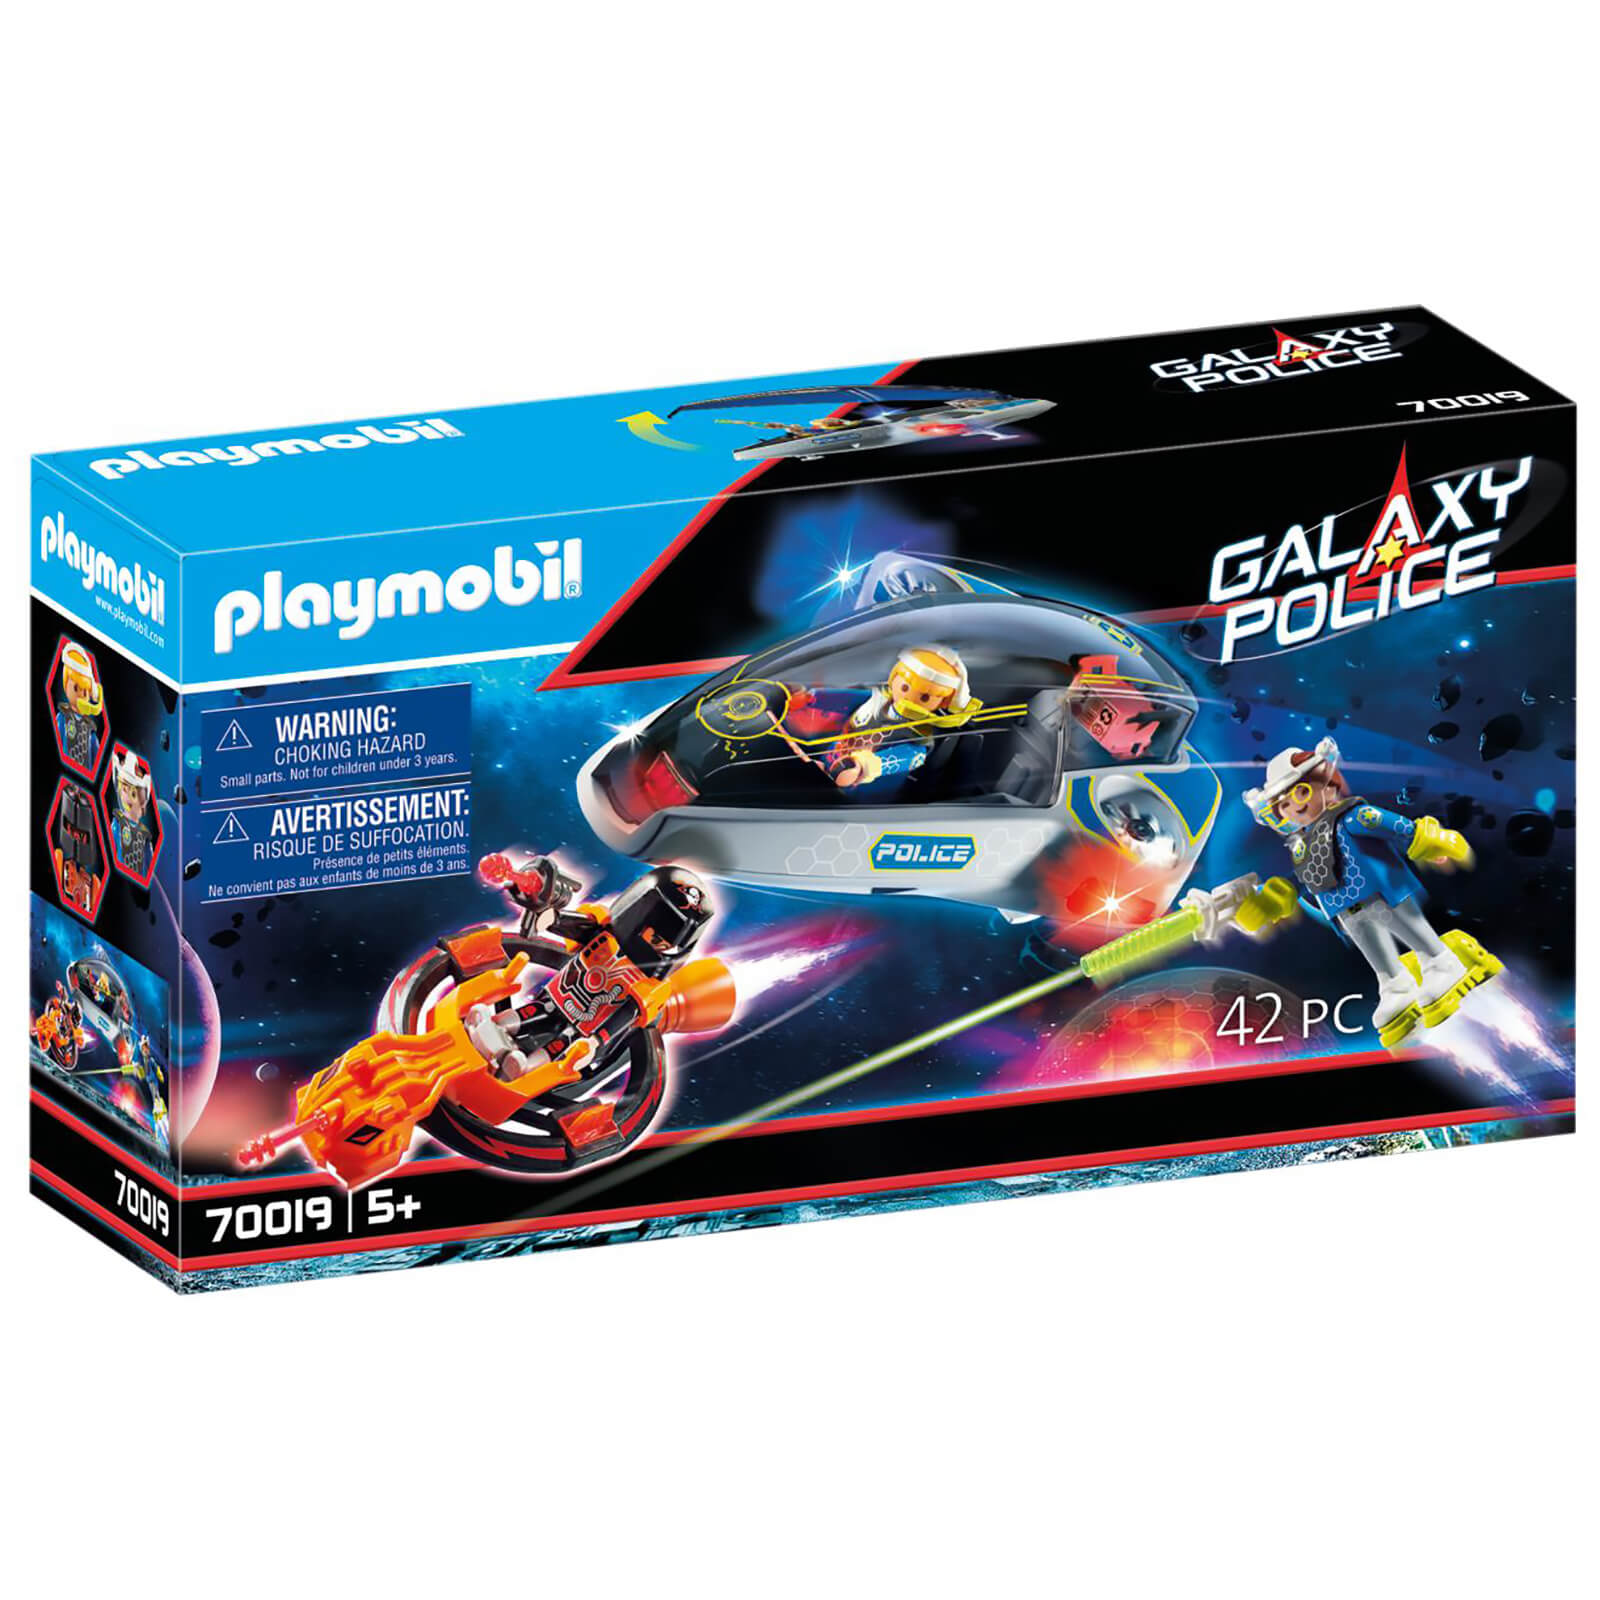 Playmobil Galaxy Police Glider (70019)